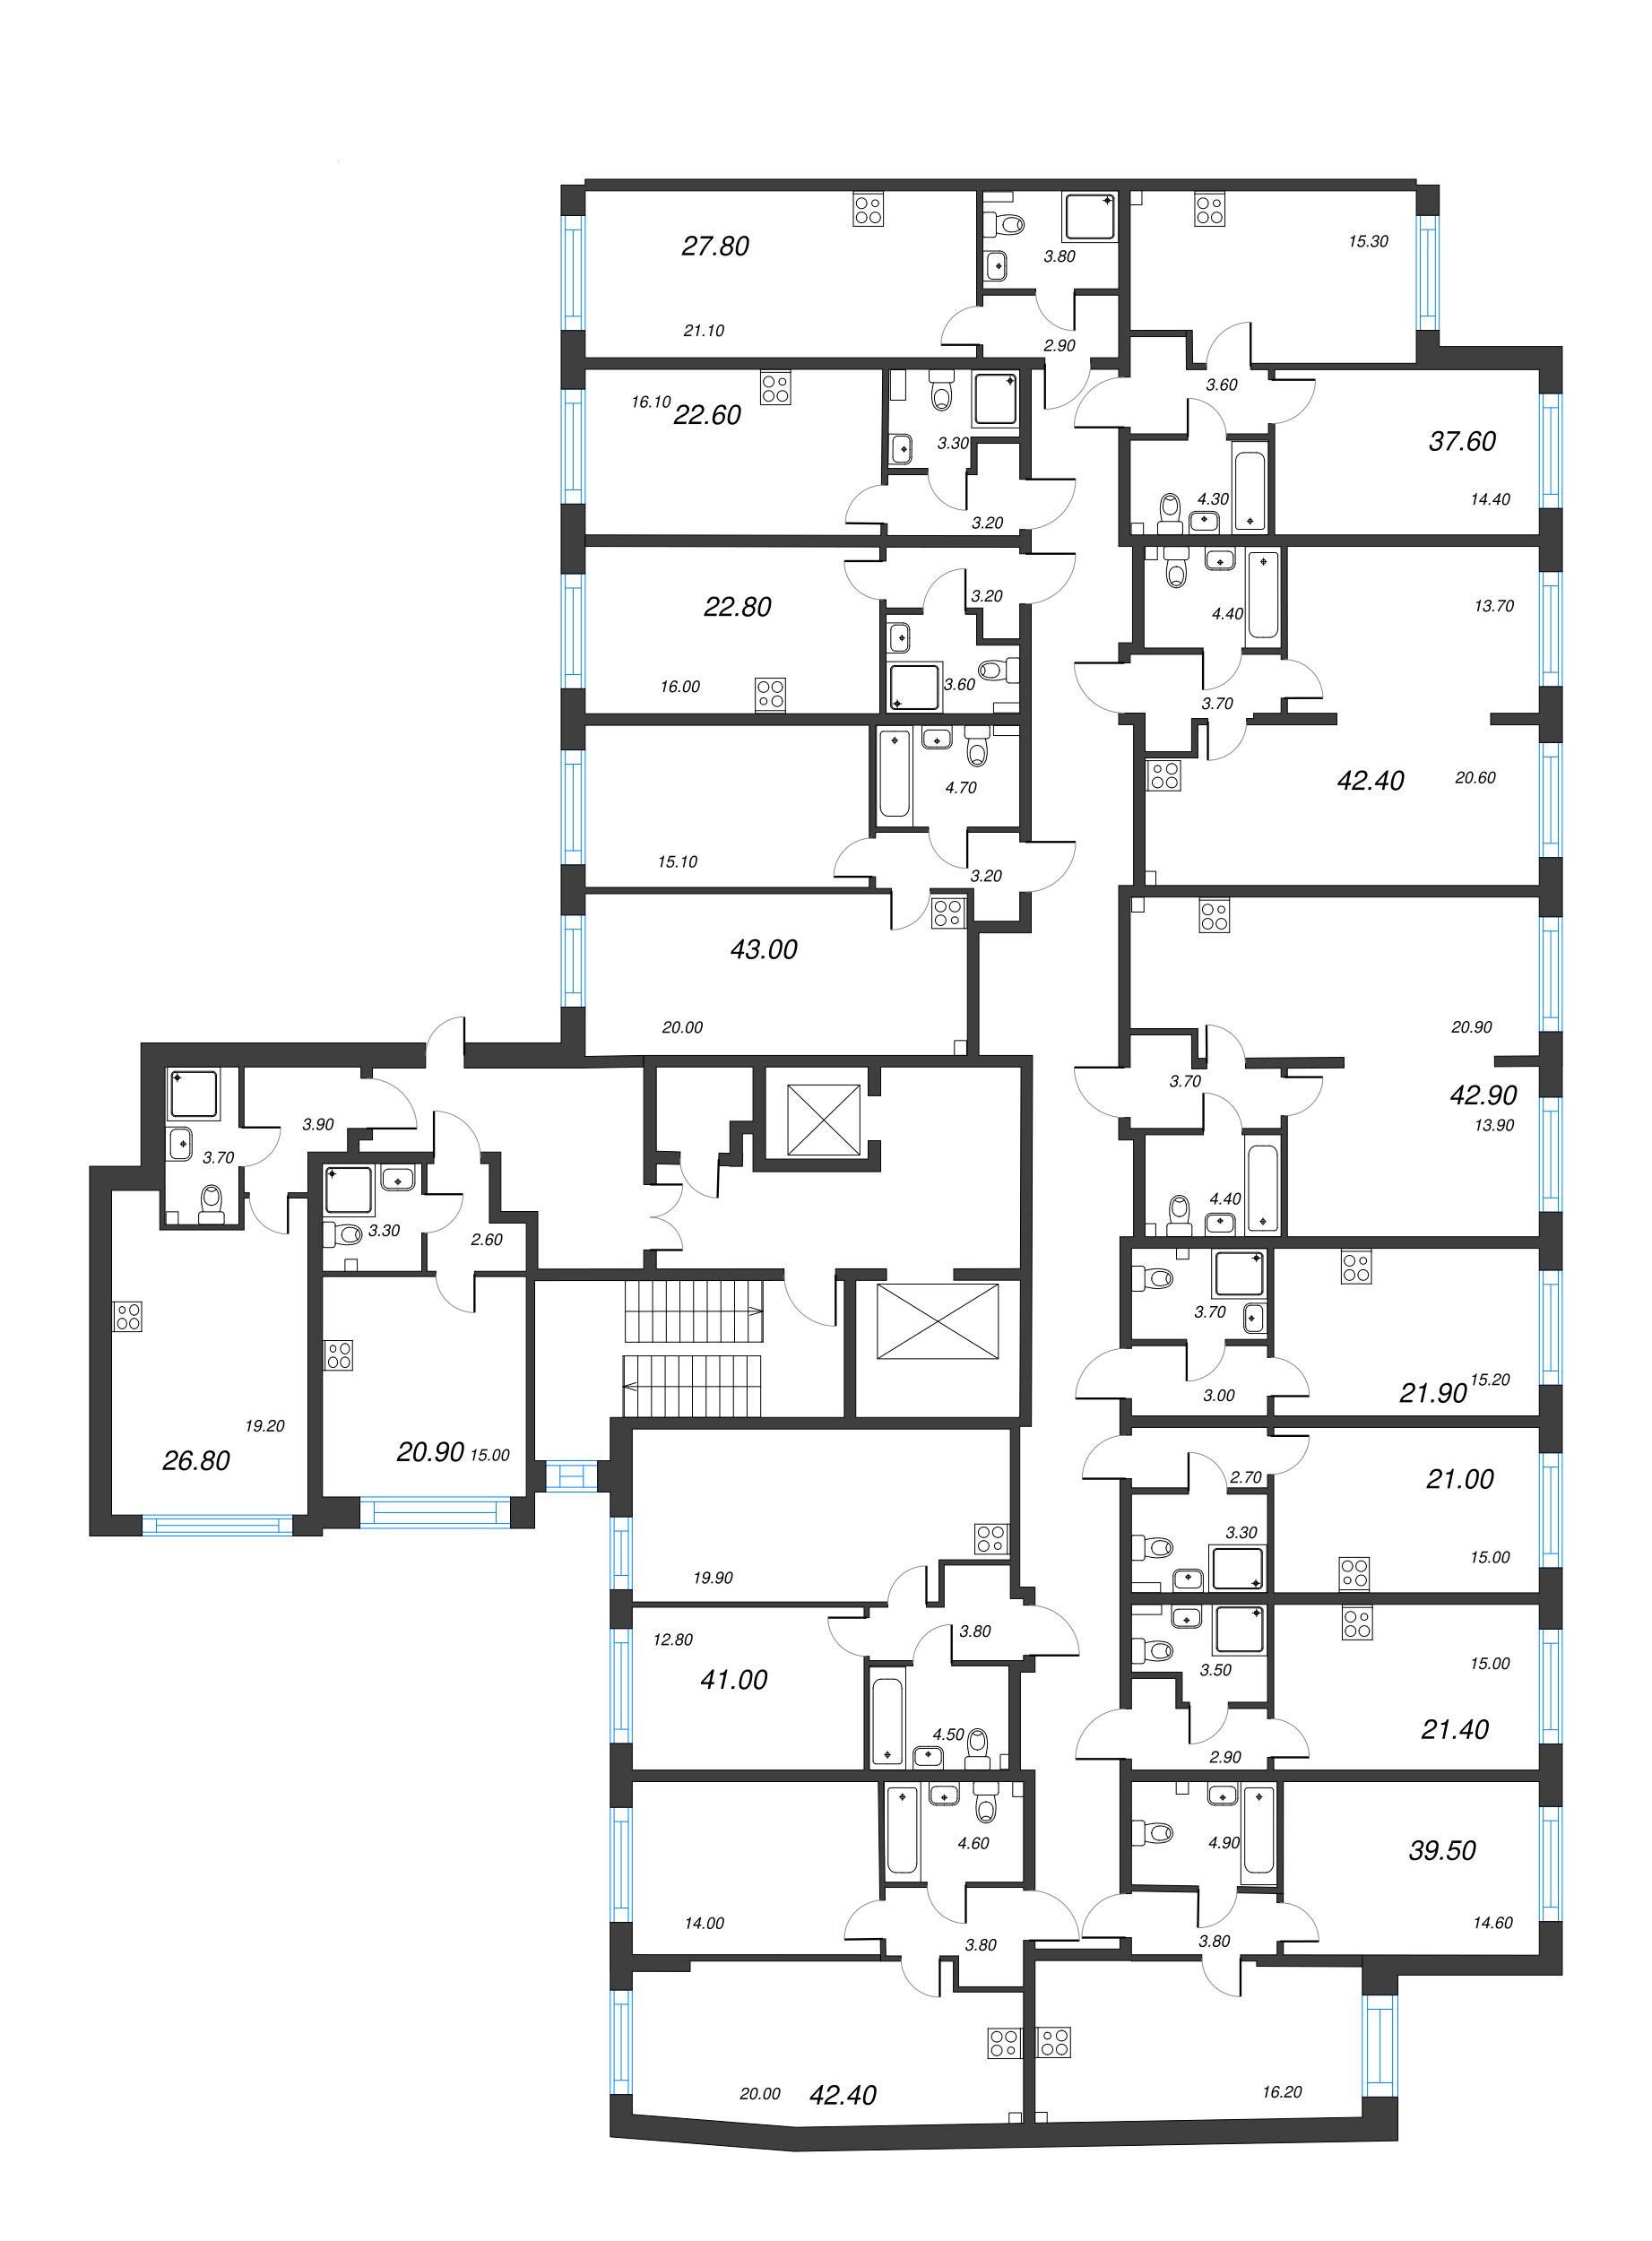 2-комнатная (Евро) квартира, 37.6 м² - планировка этажа